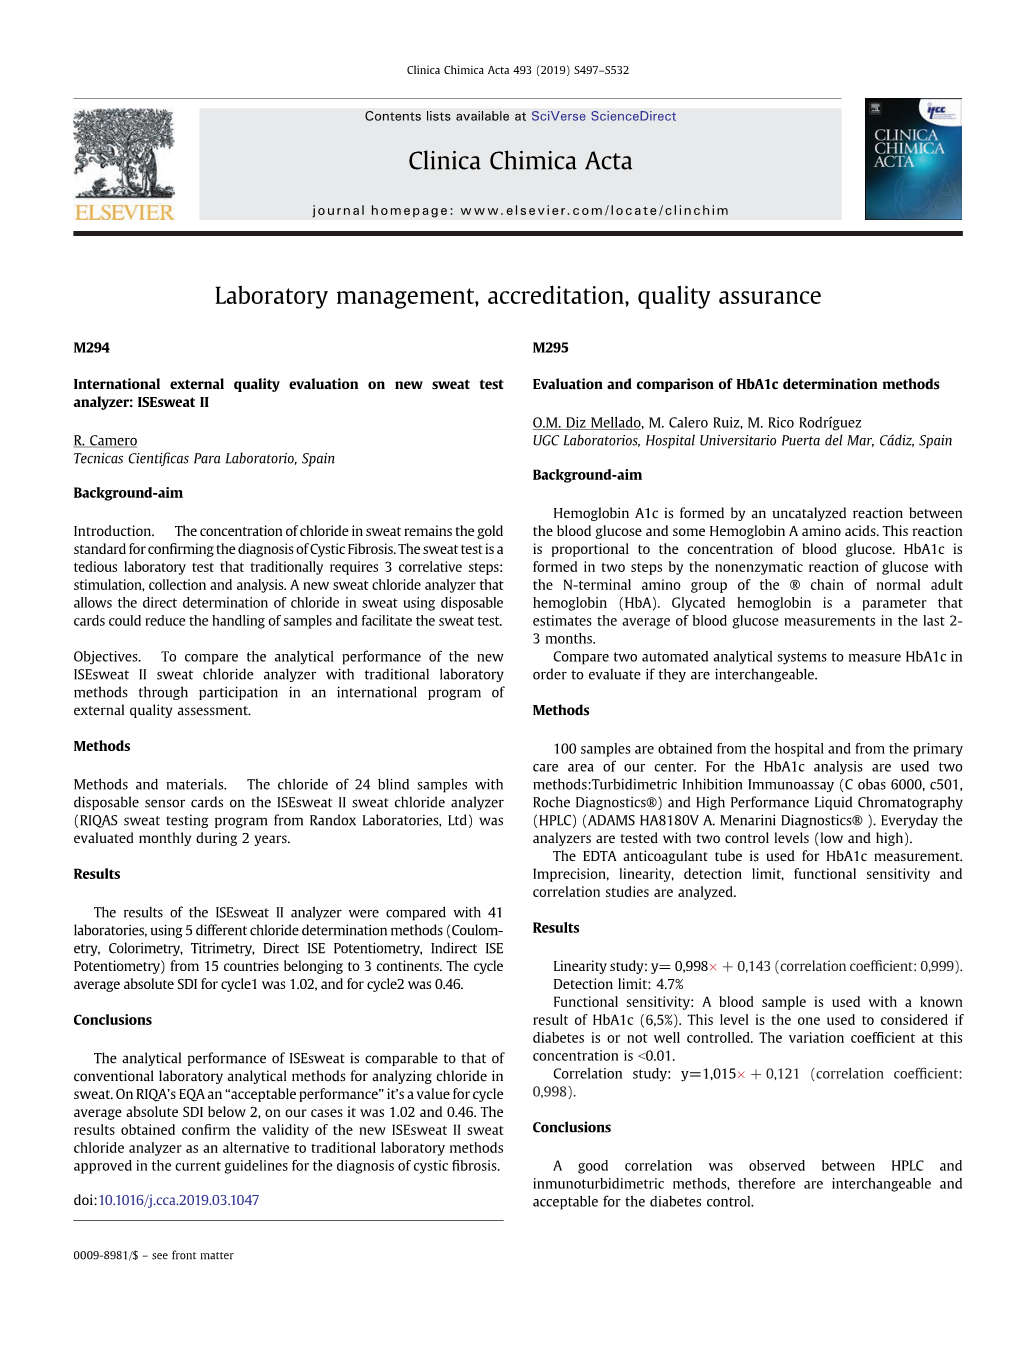 Laboratory Management, Accreditation, Quality Assurance